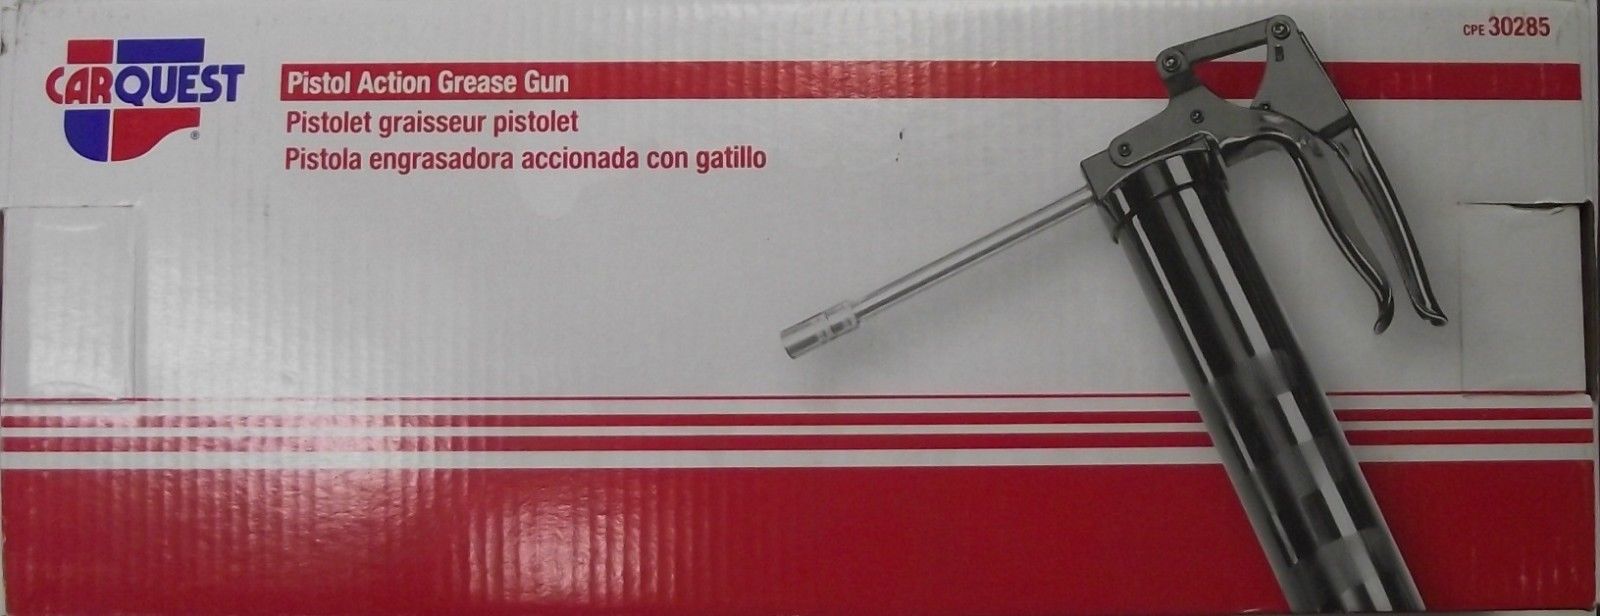 Carquest 30285 Pistol Action Grease Gun